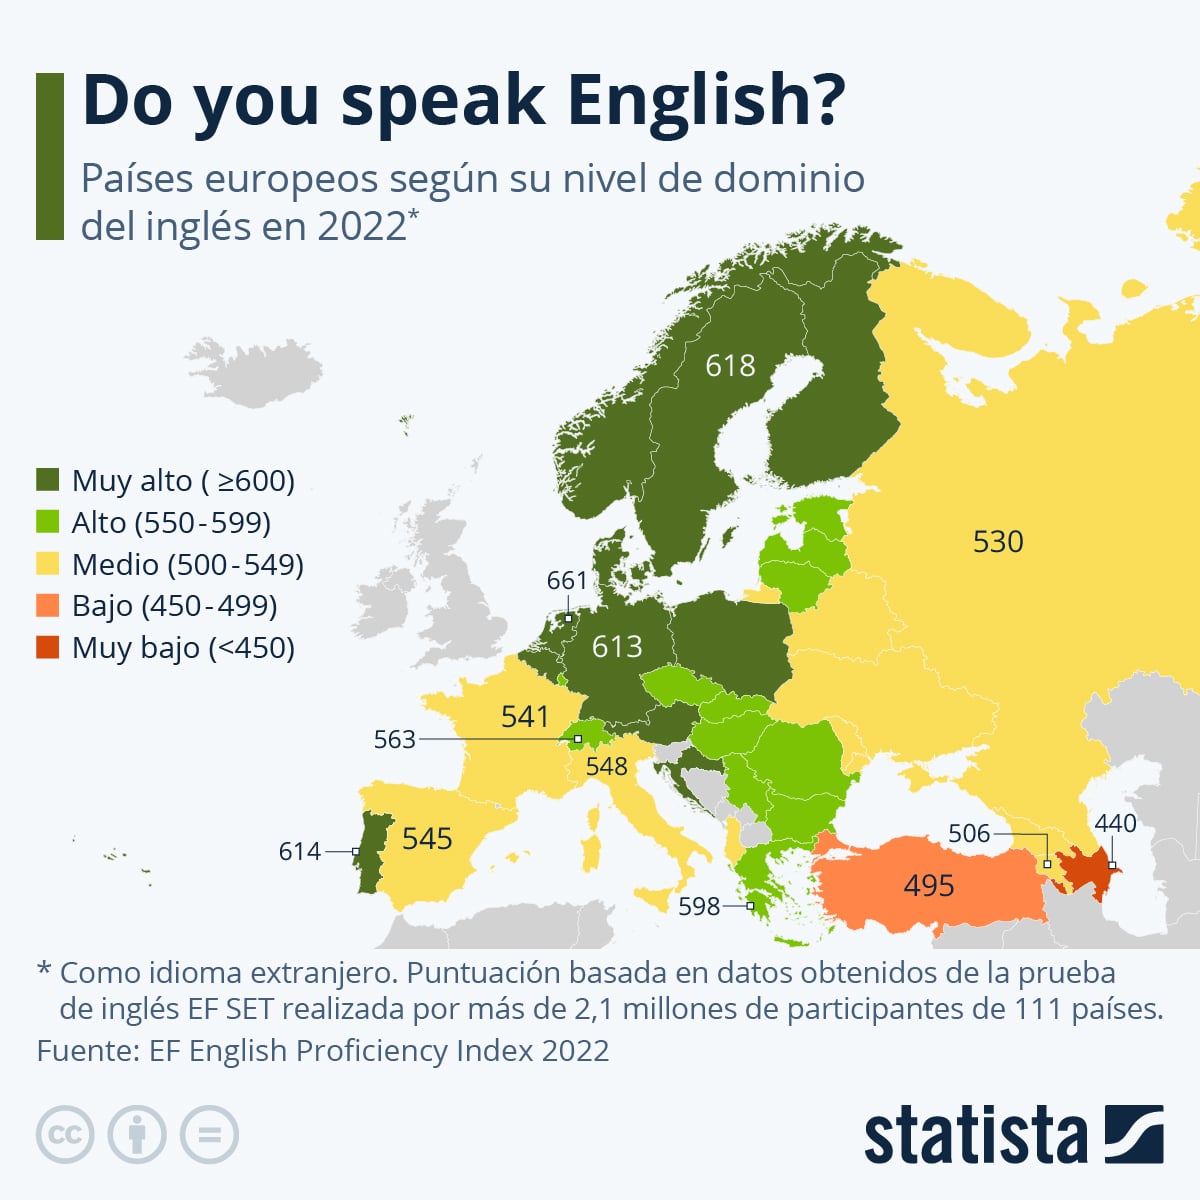 paises europeos según nivel de dominio del inglés